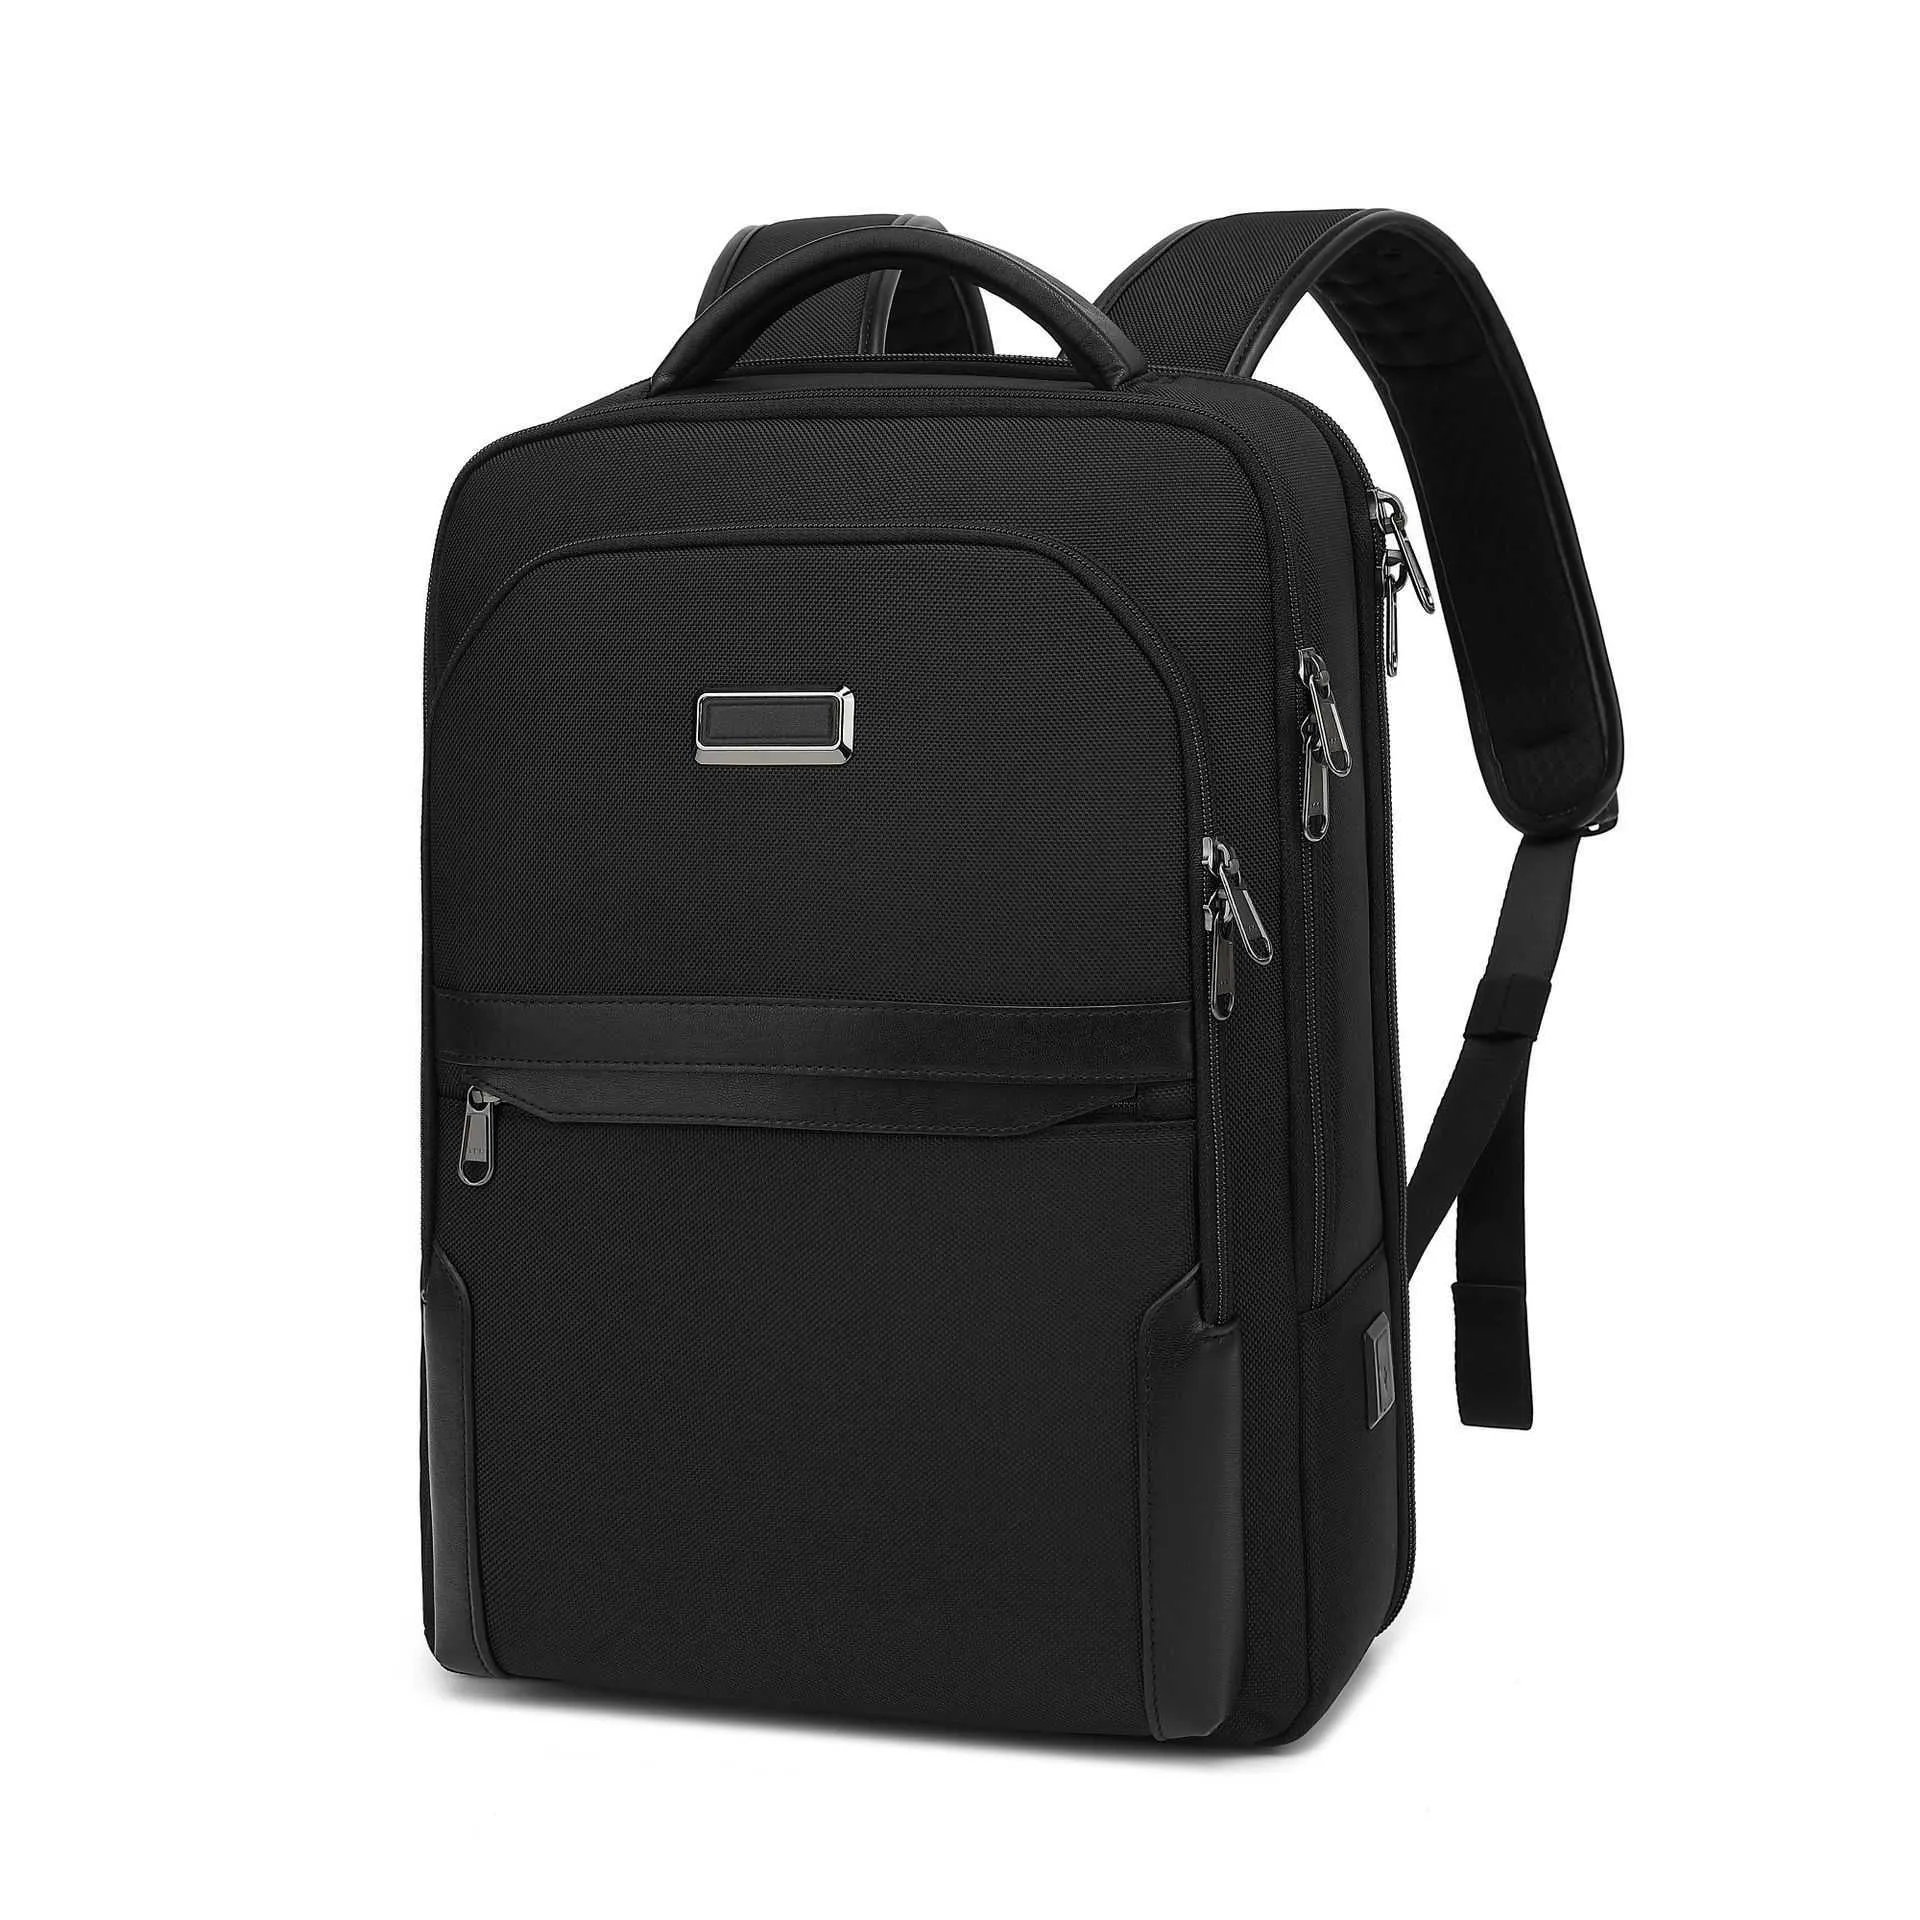 Ballistic Ballistic Nylon Bags Computer Bag Series Backpack 240415